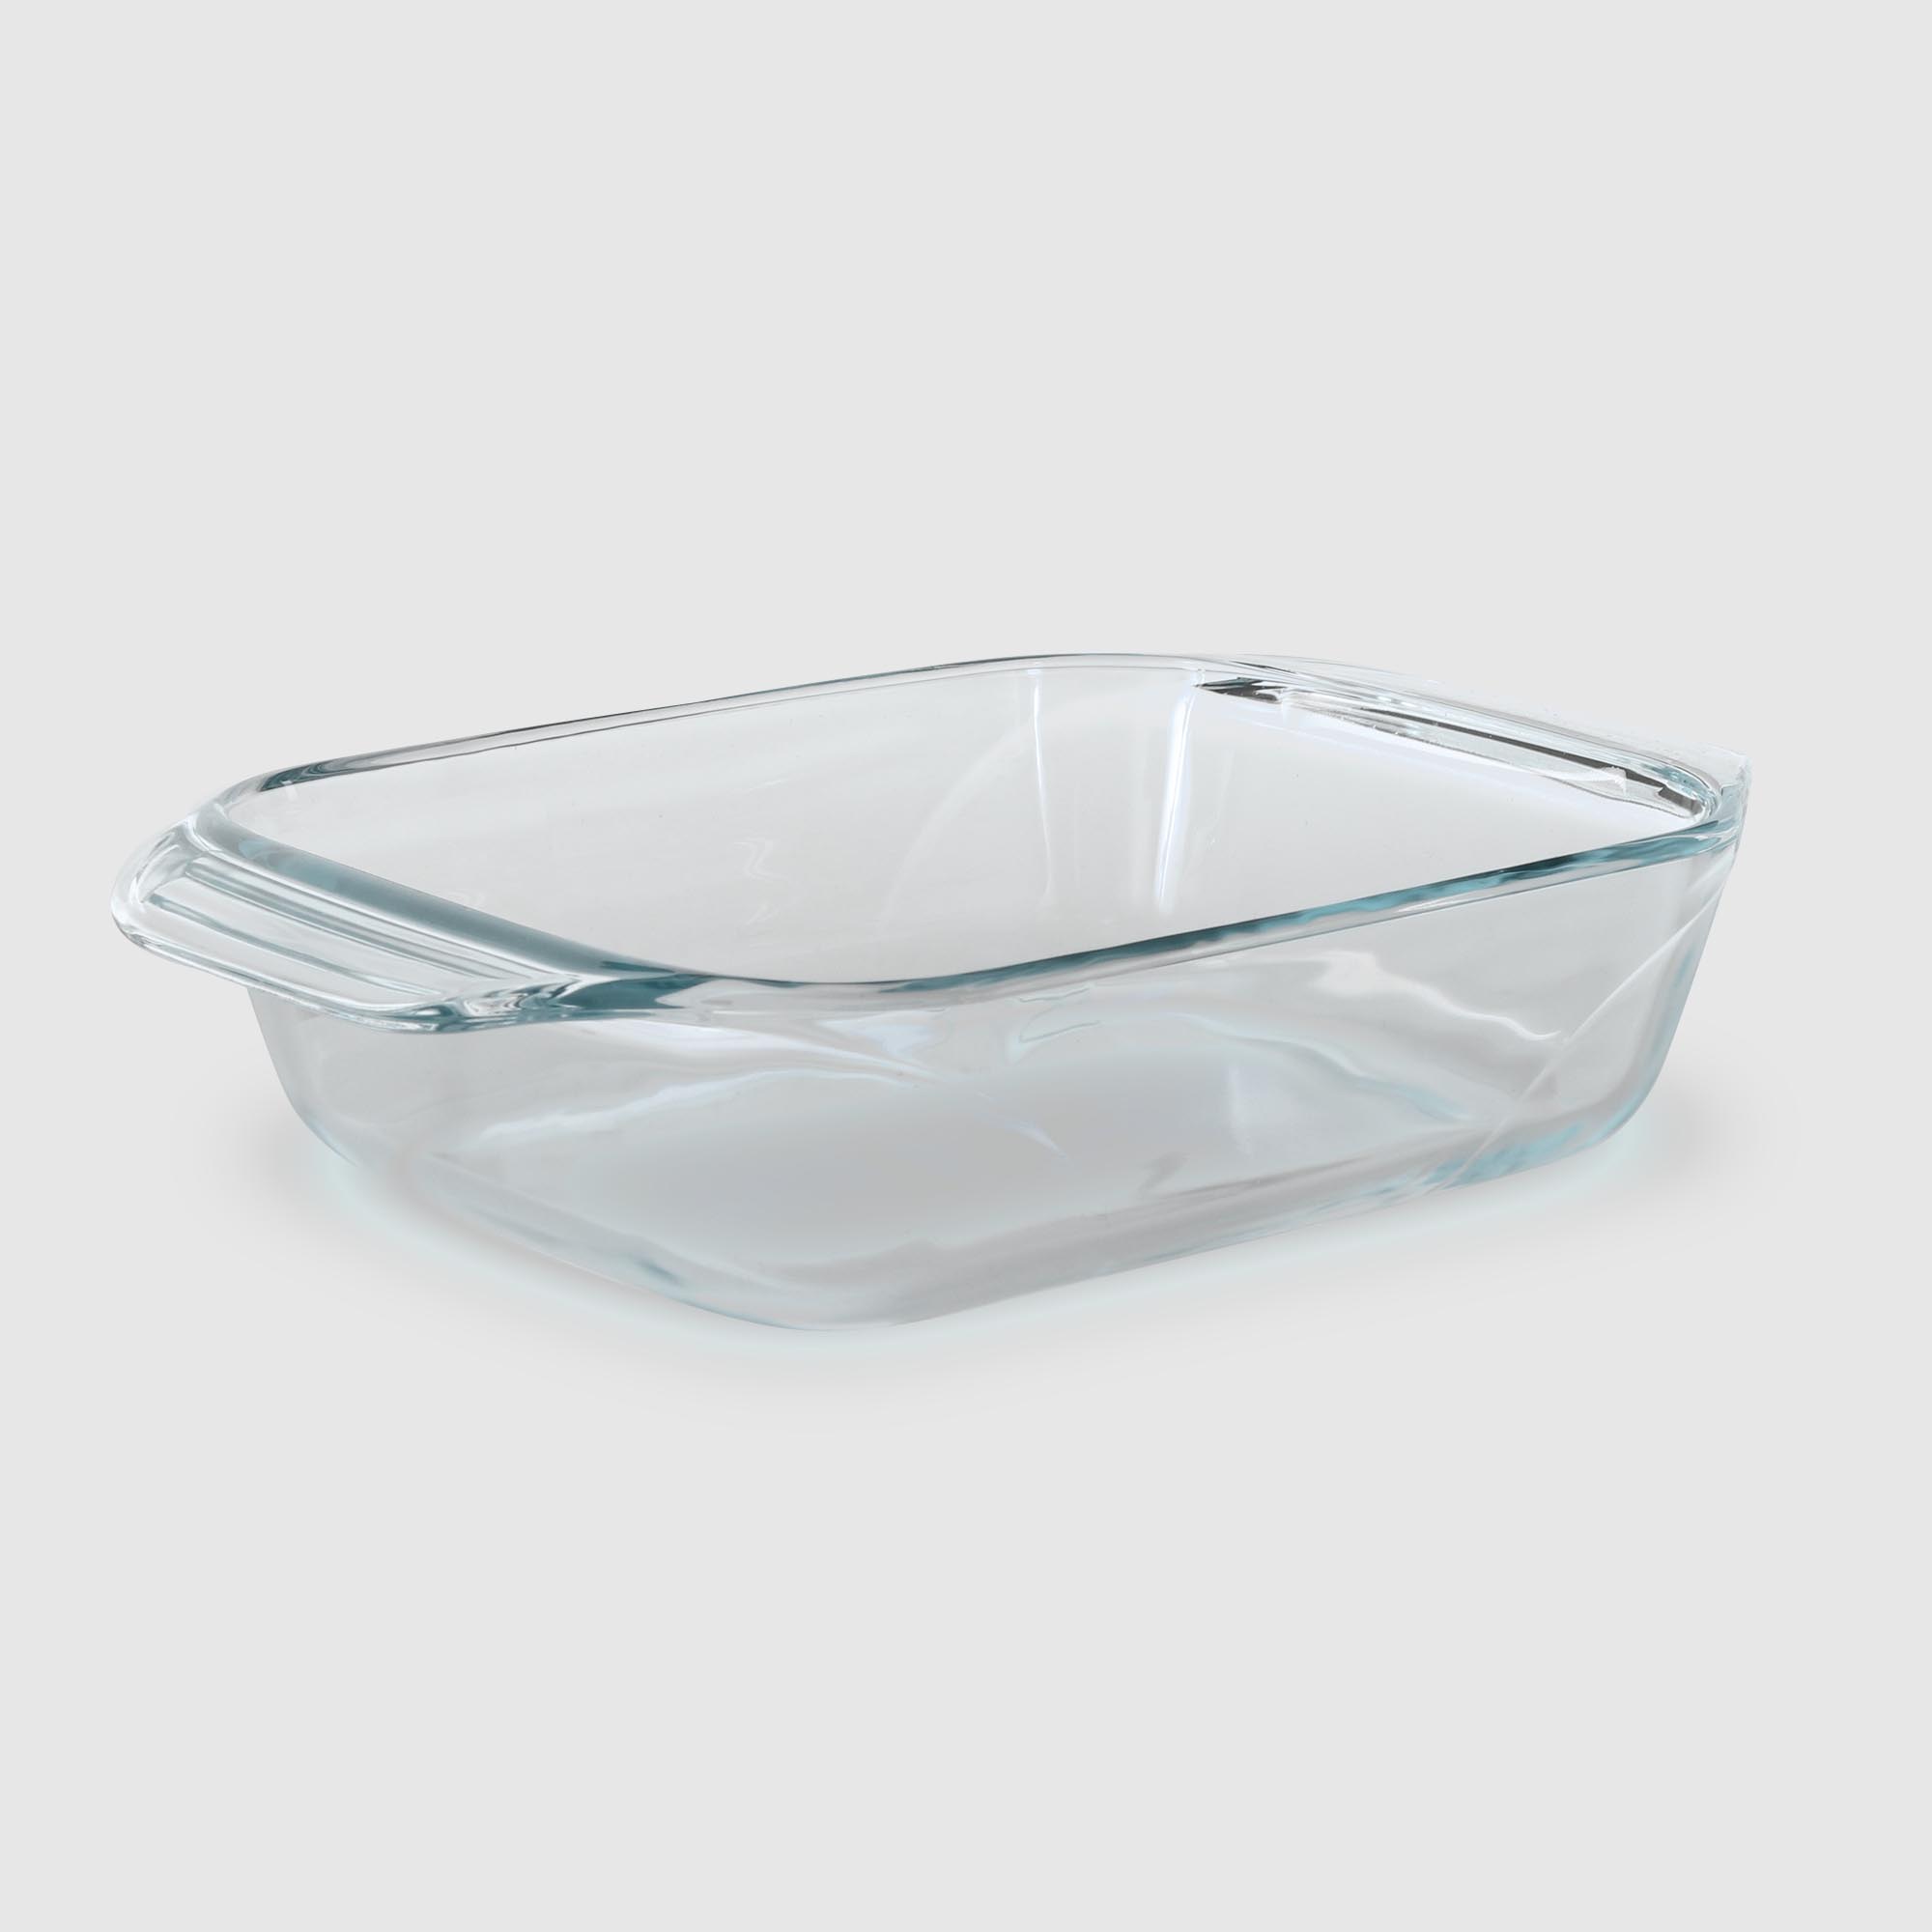 форма для запекания pyrex irresistible стекло 27х17 см Форма для запекания Pyrex прямоугольная стекло 27х17 см